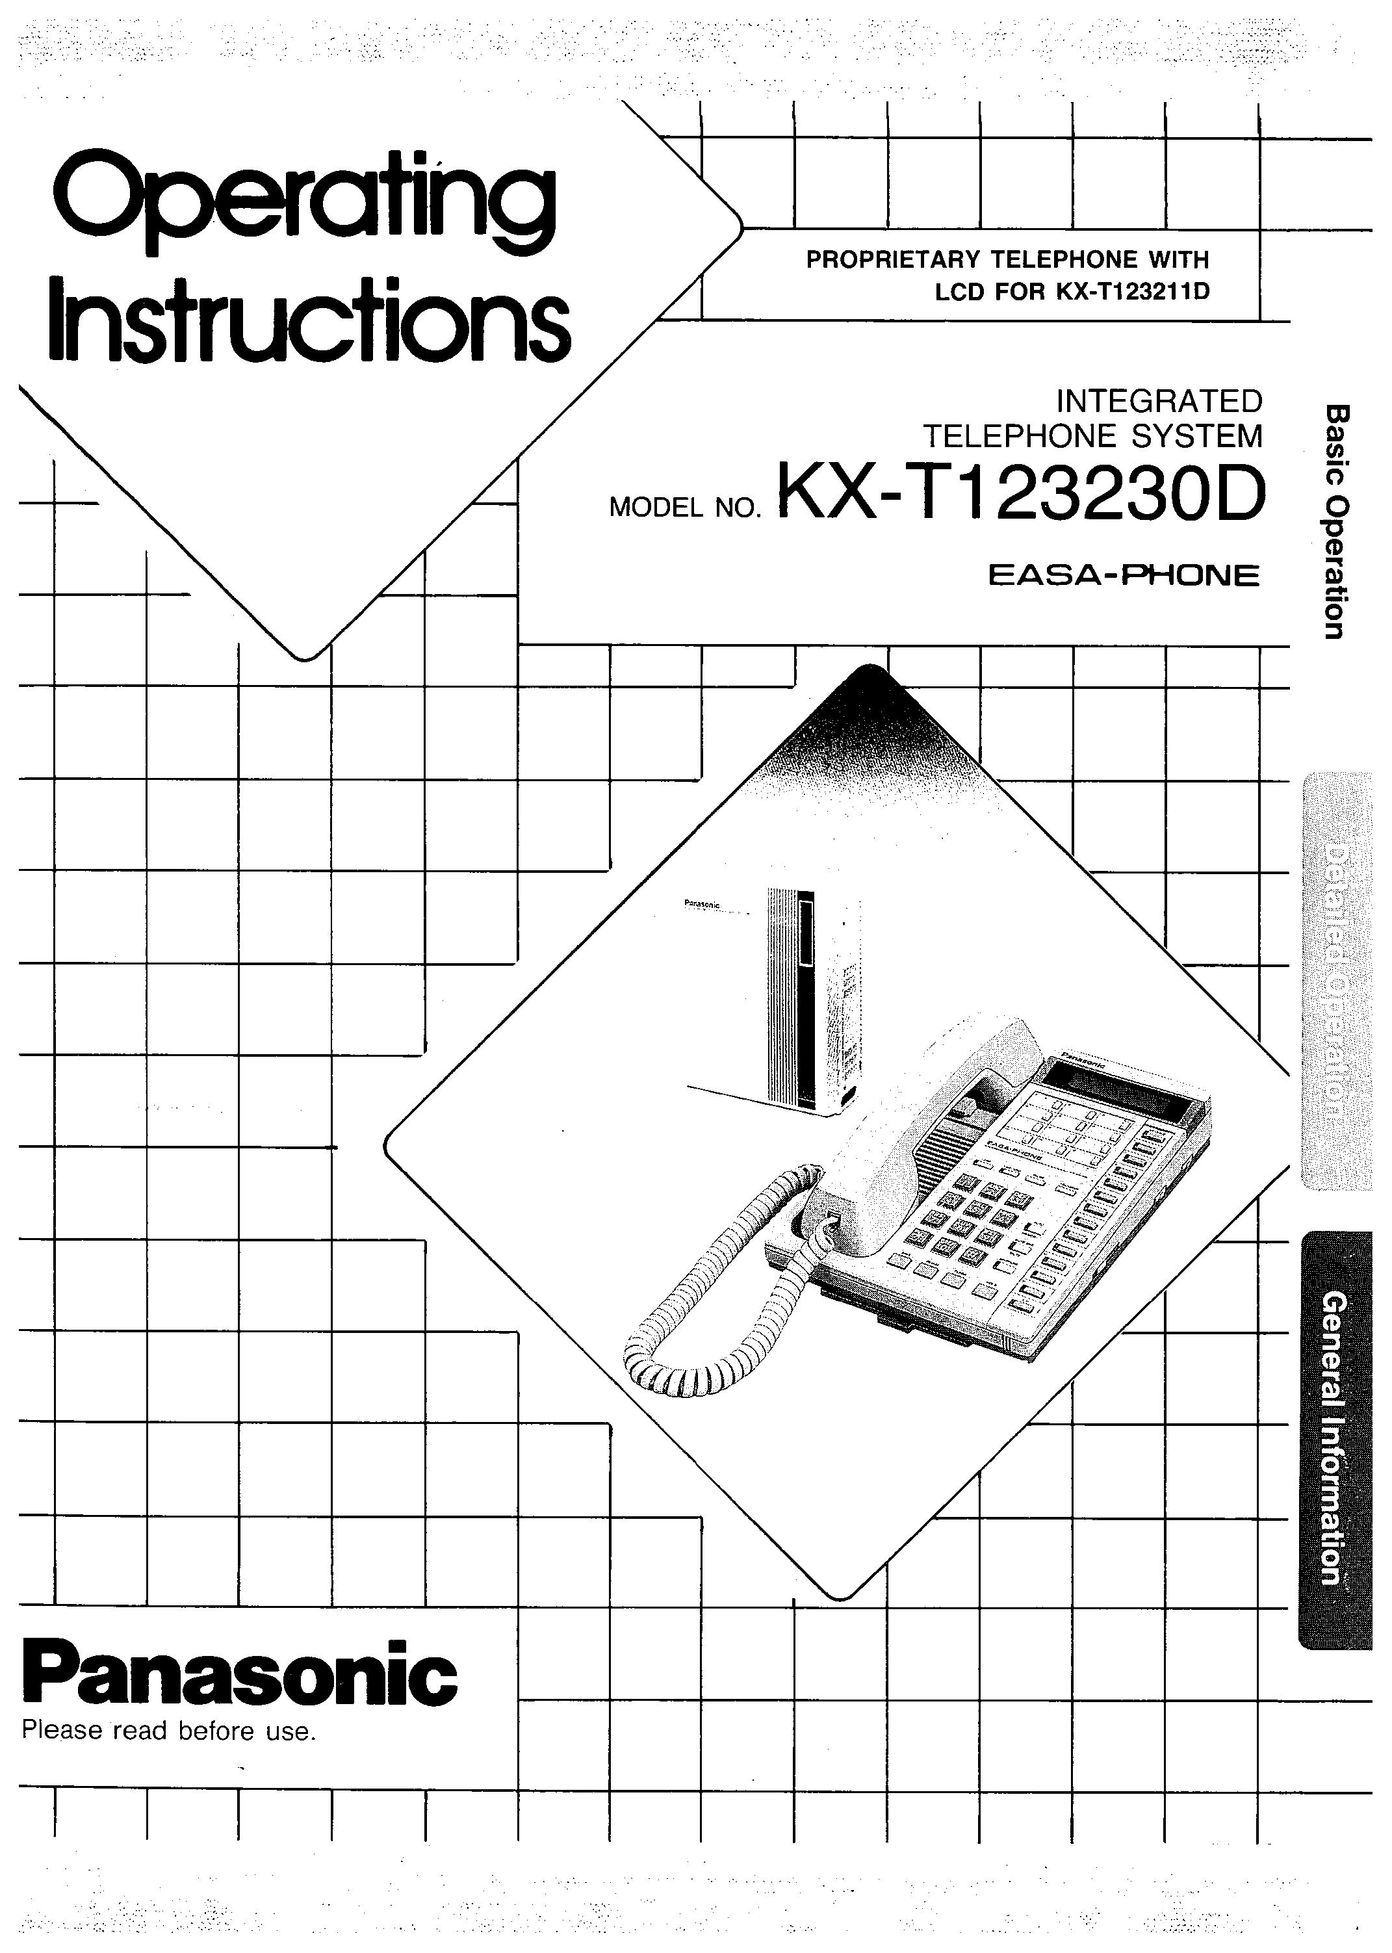 Panasonic integrated telephone system Telephone User Manual